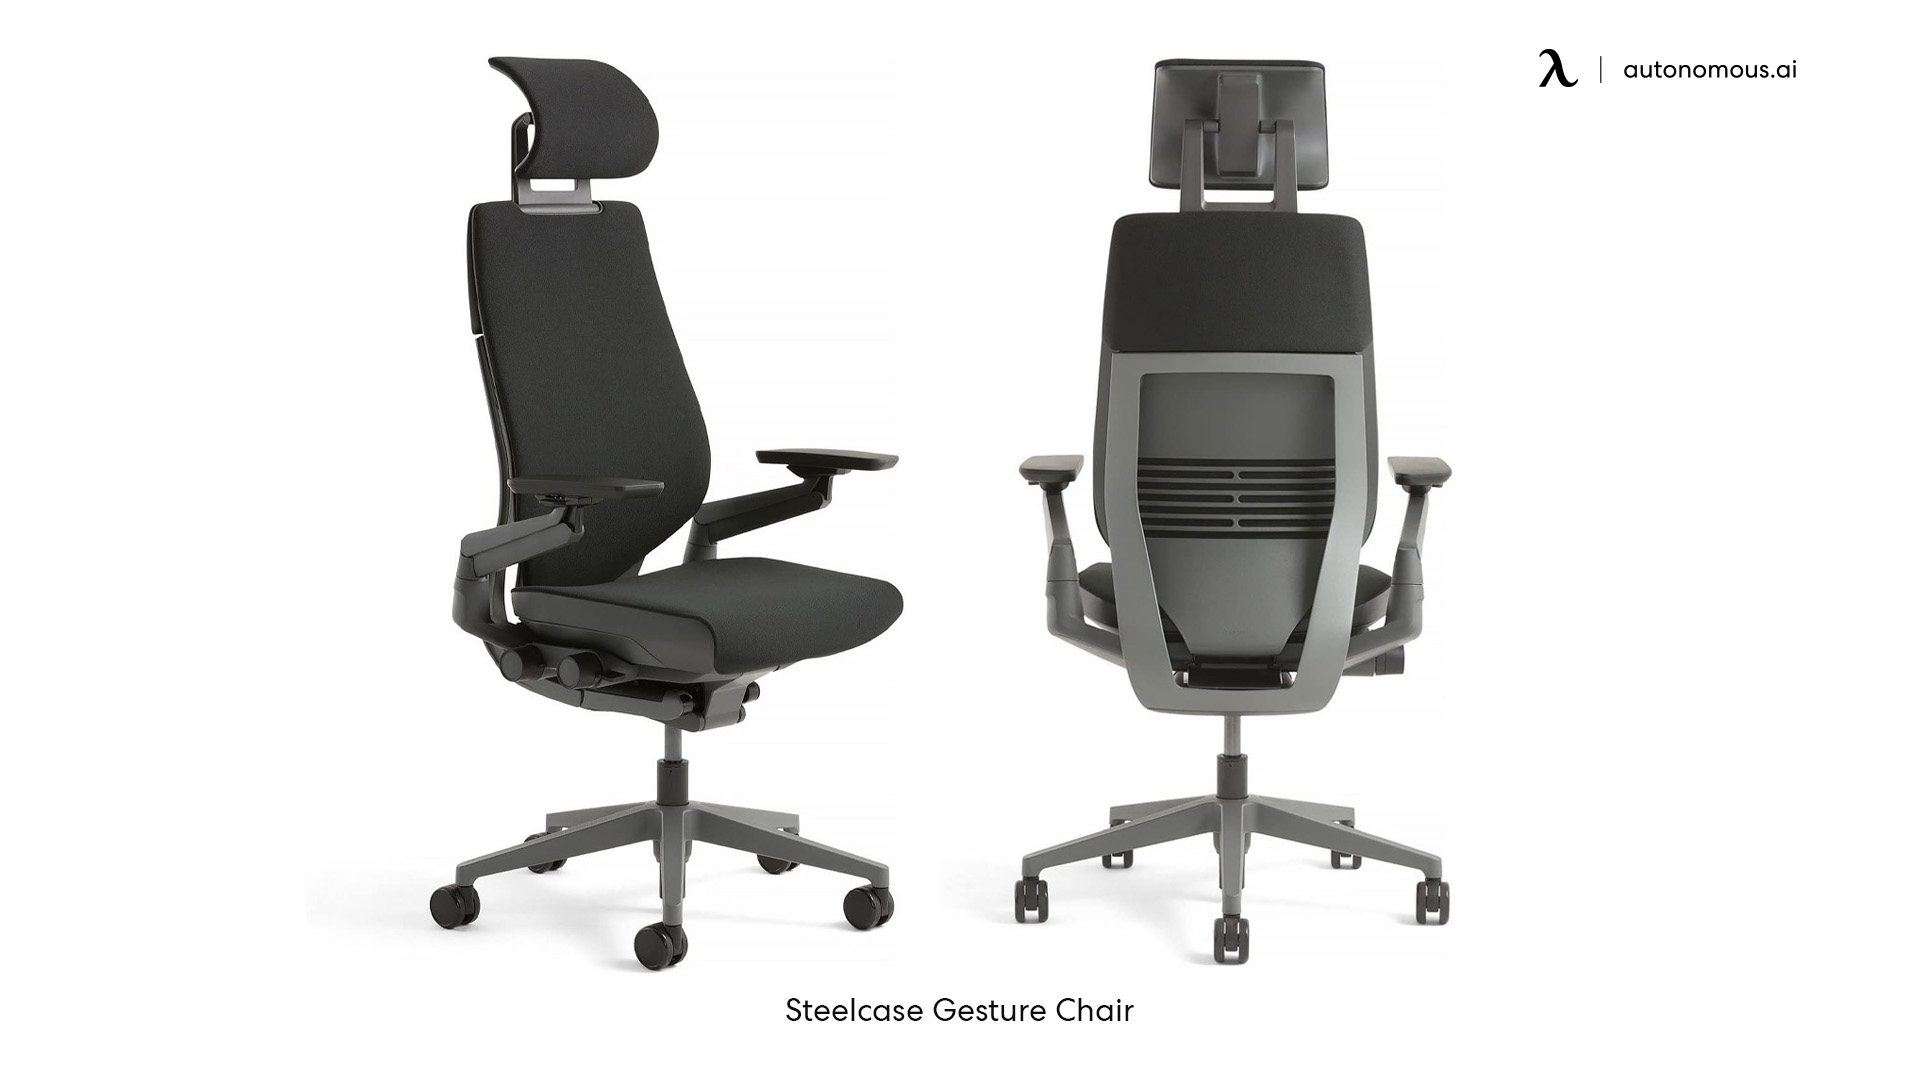 Steelcase Gesture 12-hour office chair